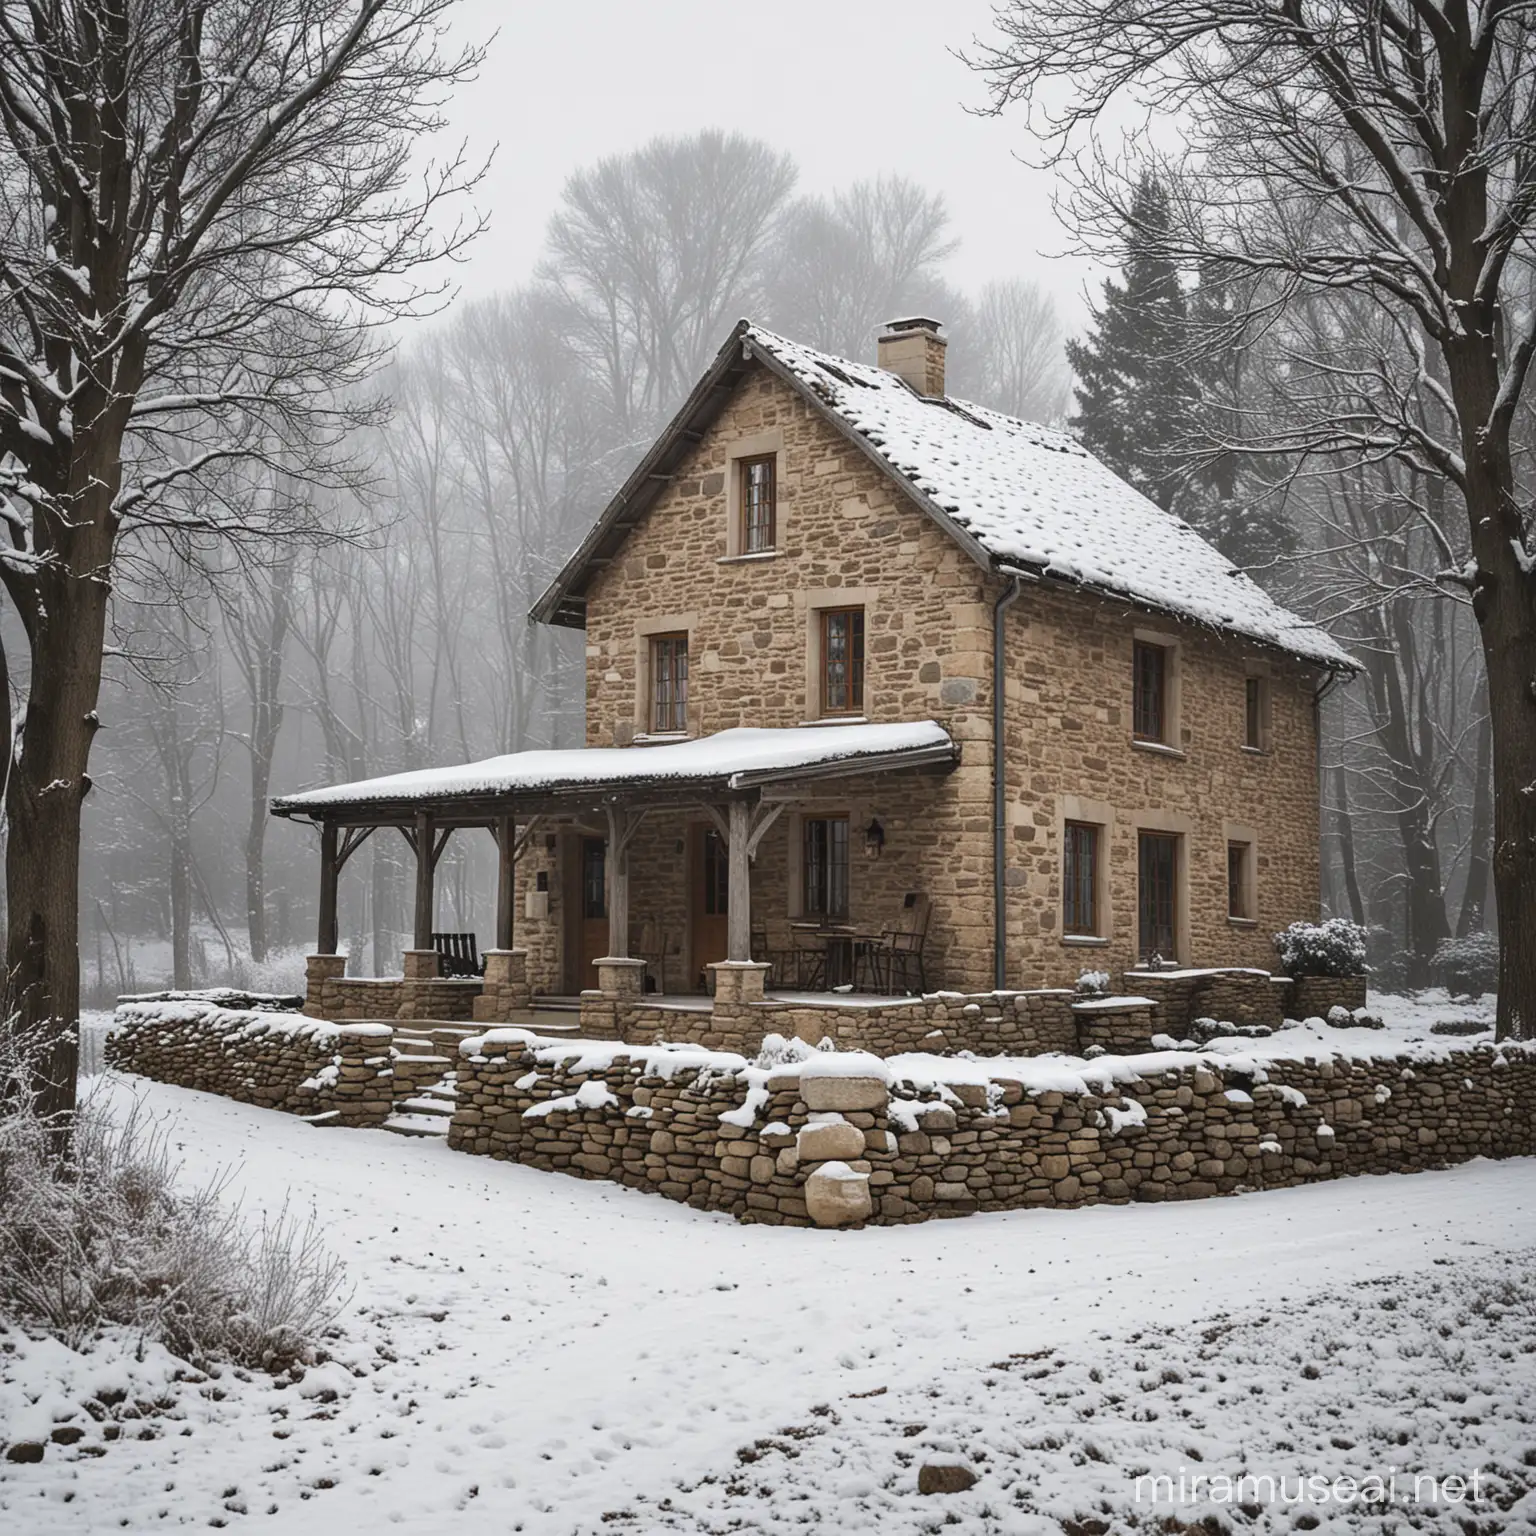 Cozy Winter Retreat Rustic Stone House Amidst Snowy Landscape